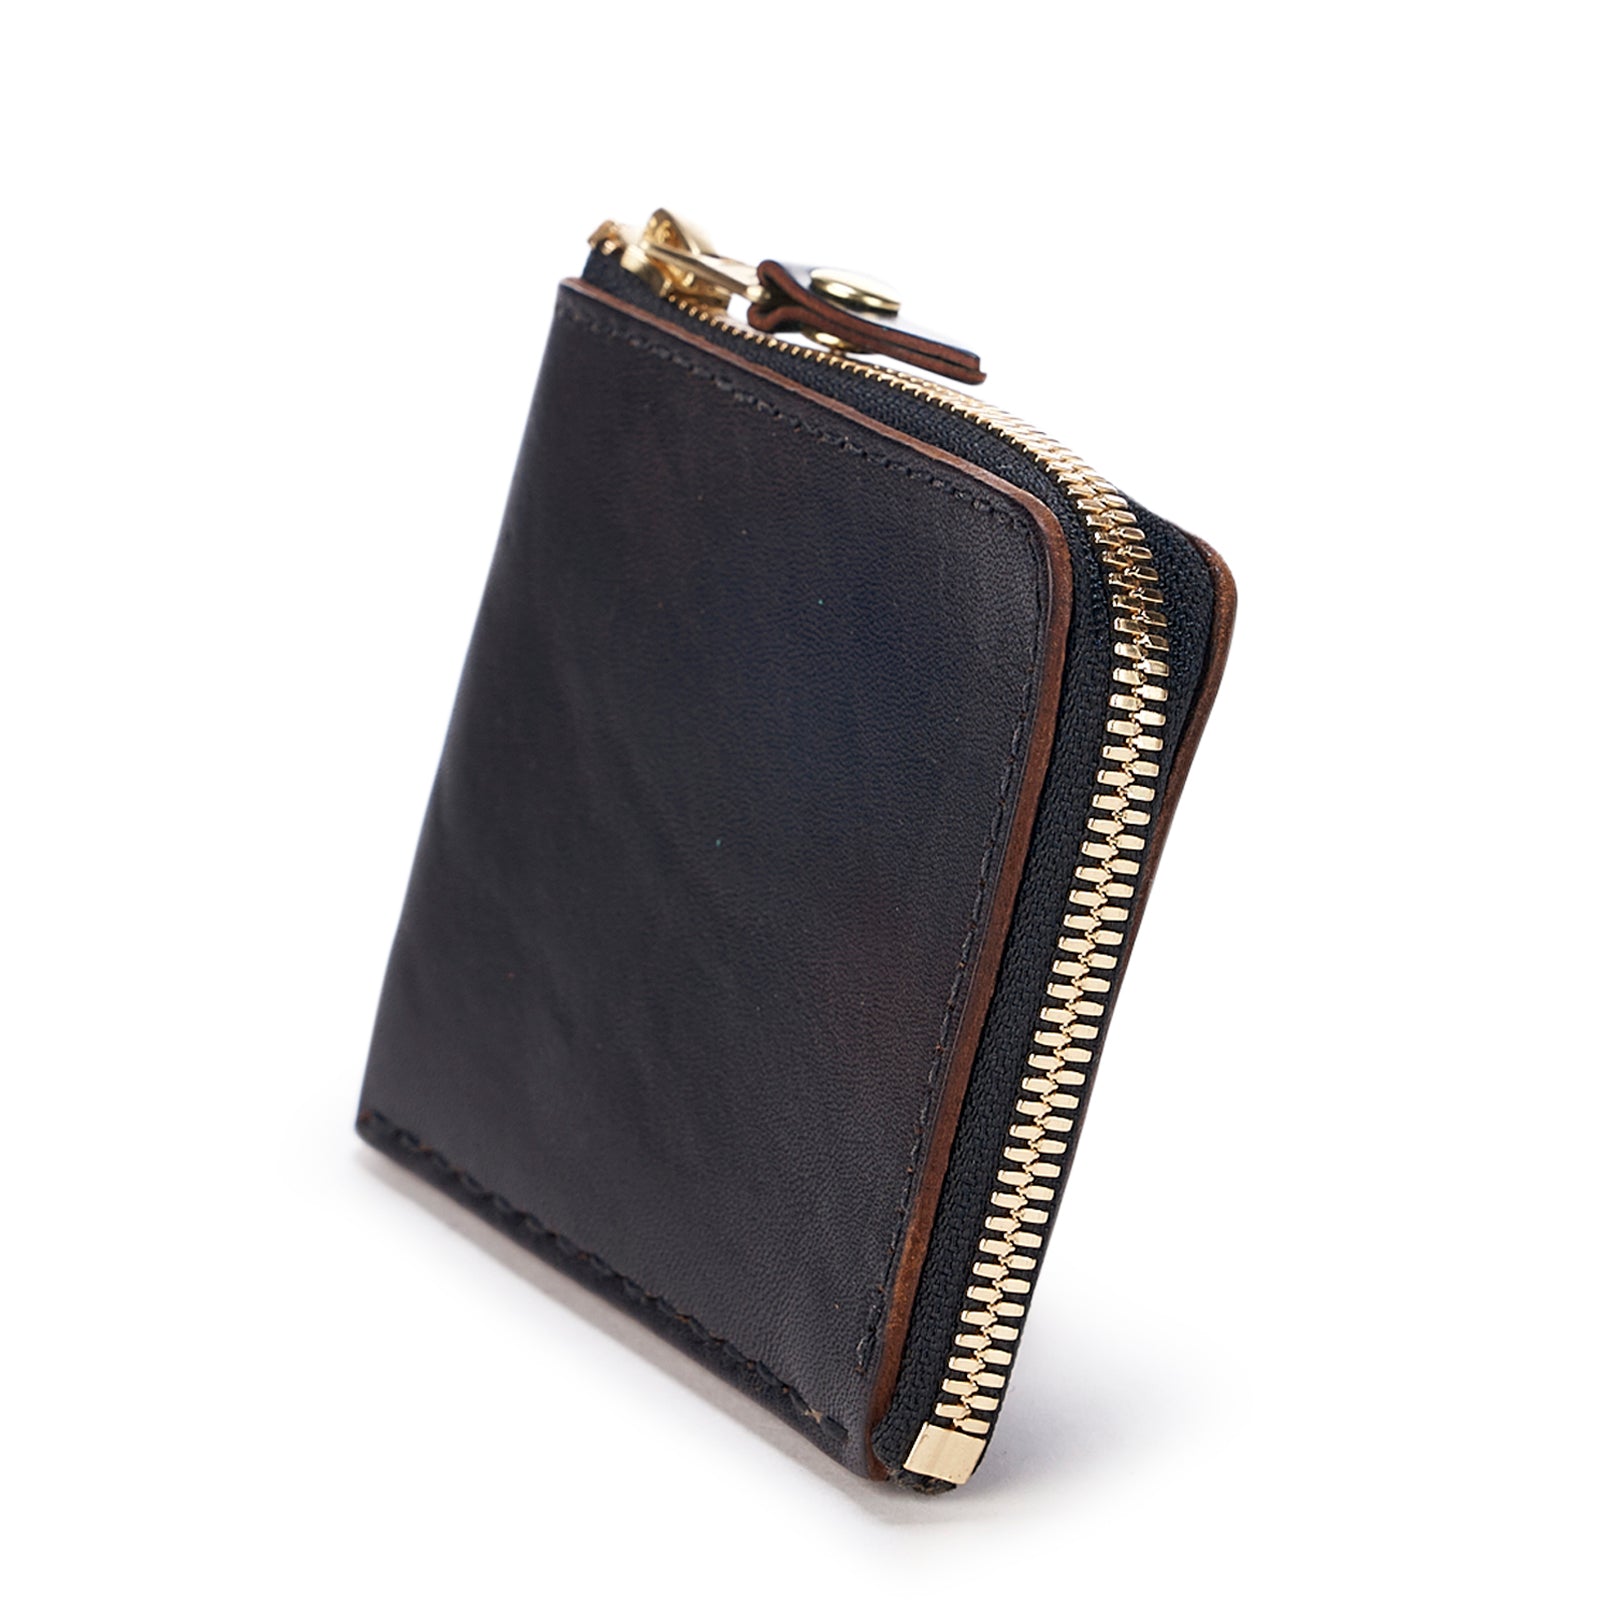 CXL Horsehide Zipper Wallet #15 — Coronado Leather